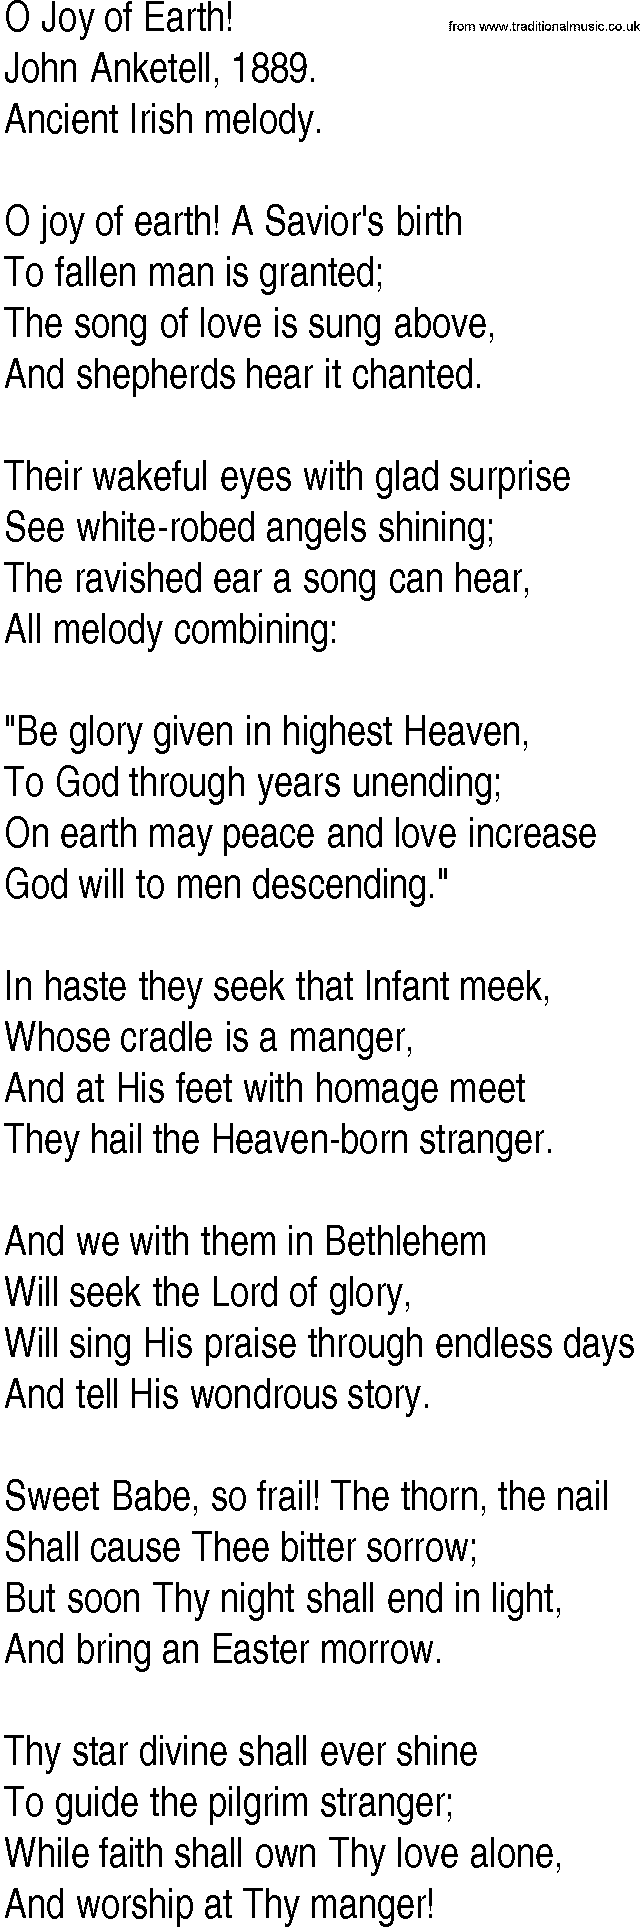 Hymn and Gospel Song: O Joy of Earth! by John Anketell lyrics